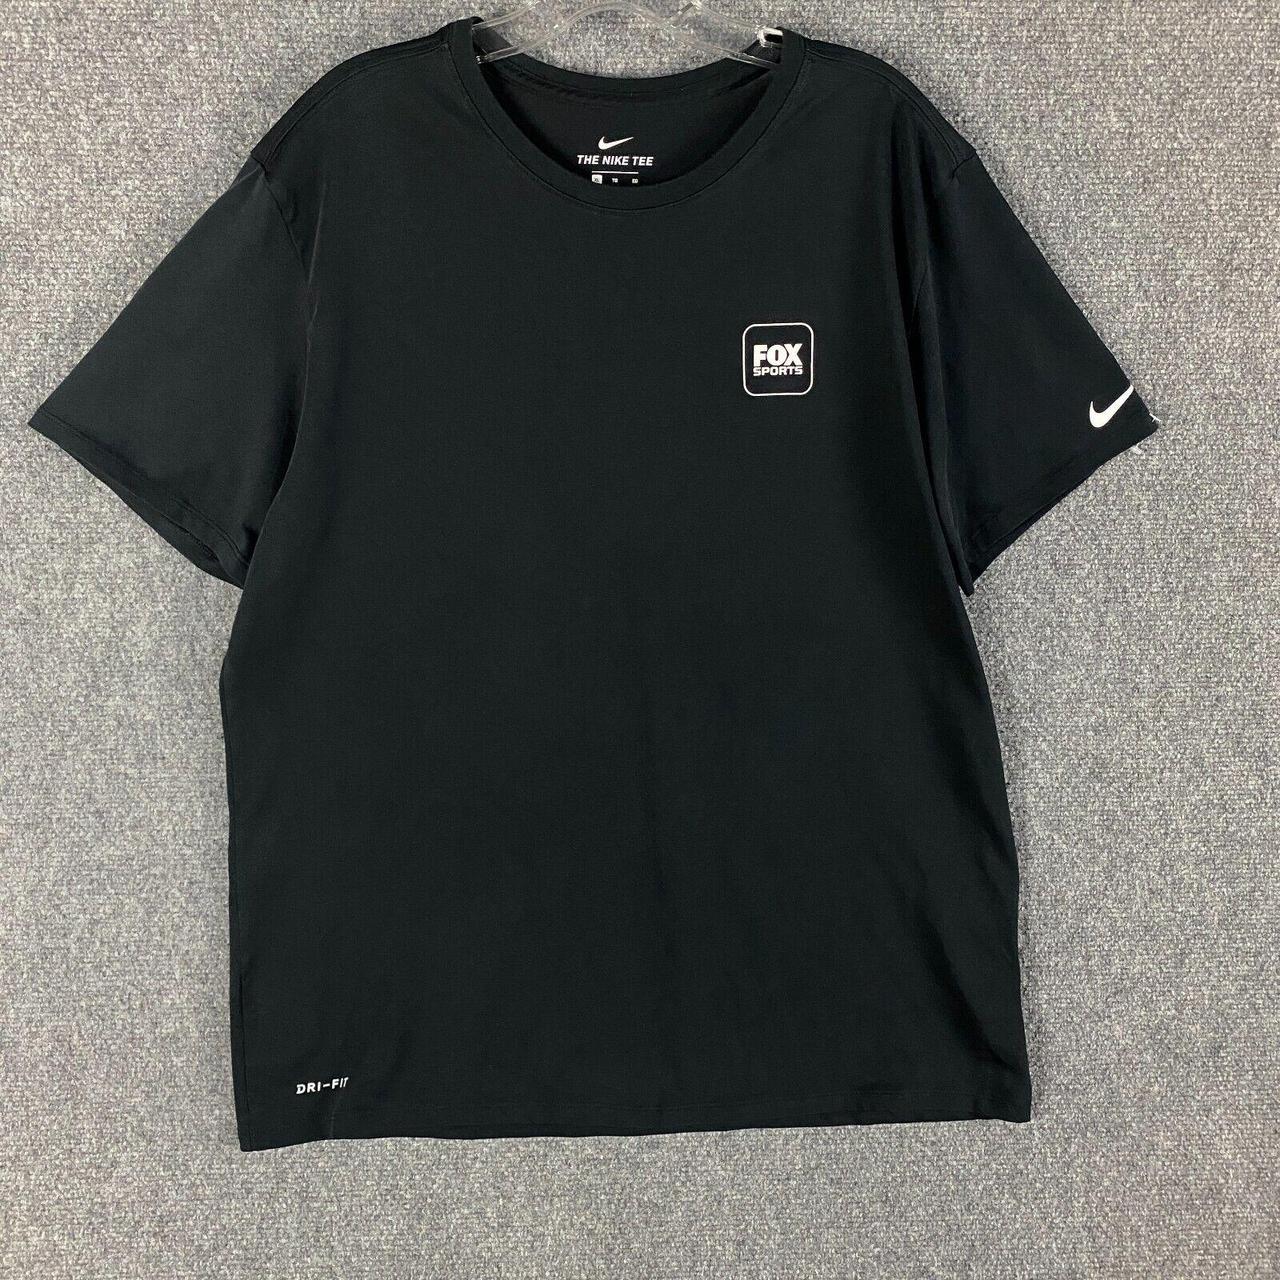 Nike Men's Shirt - Black - XXXL